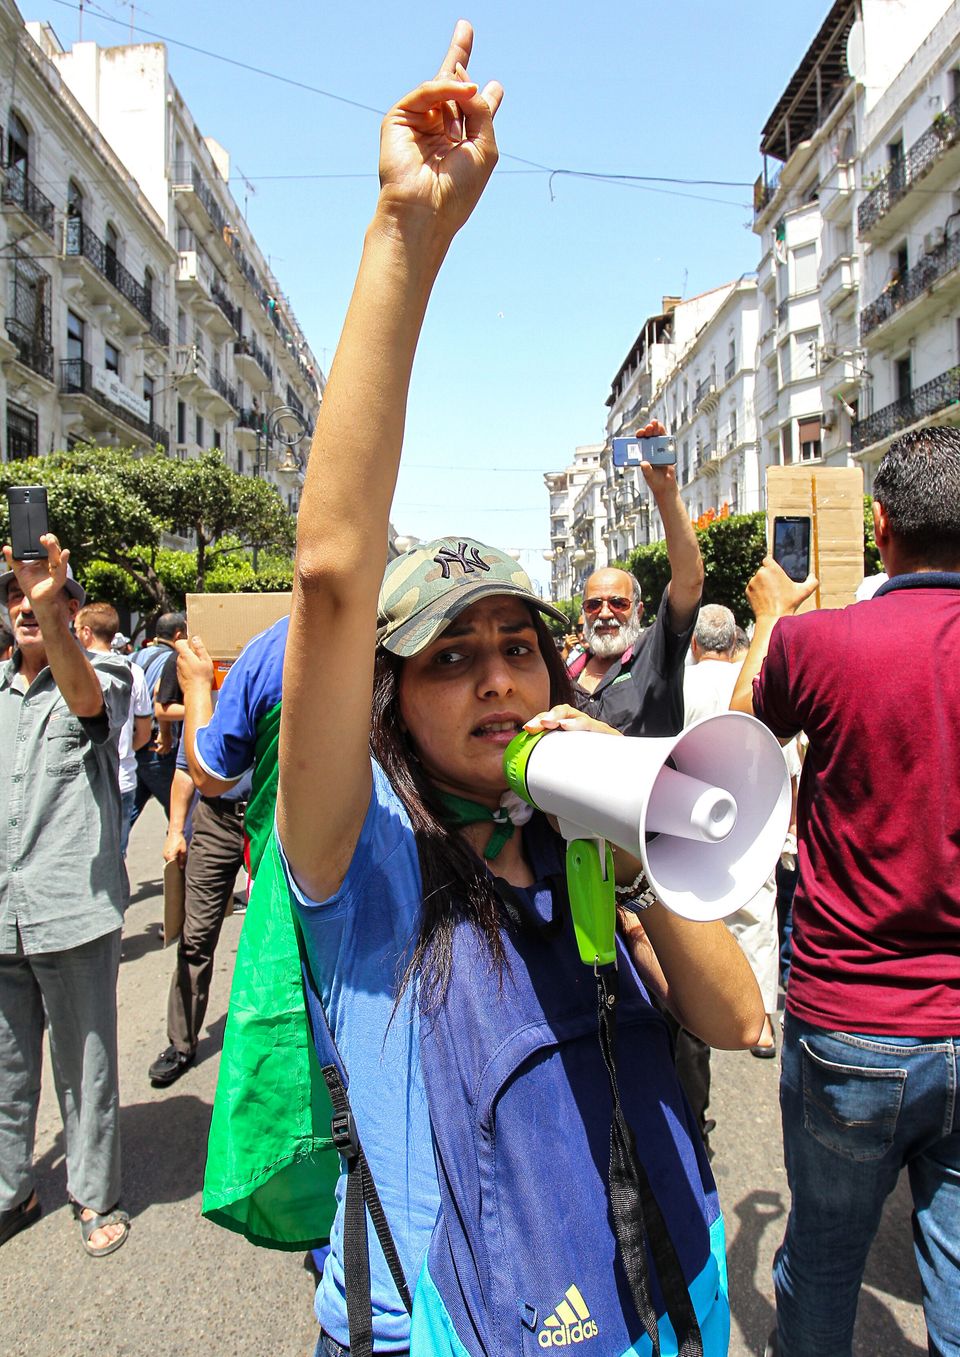 Le 21e vendredi de manifestation Ã  Alger en